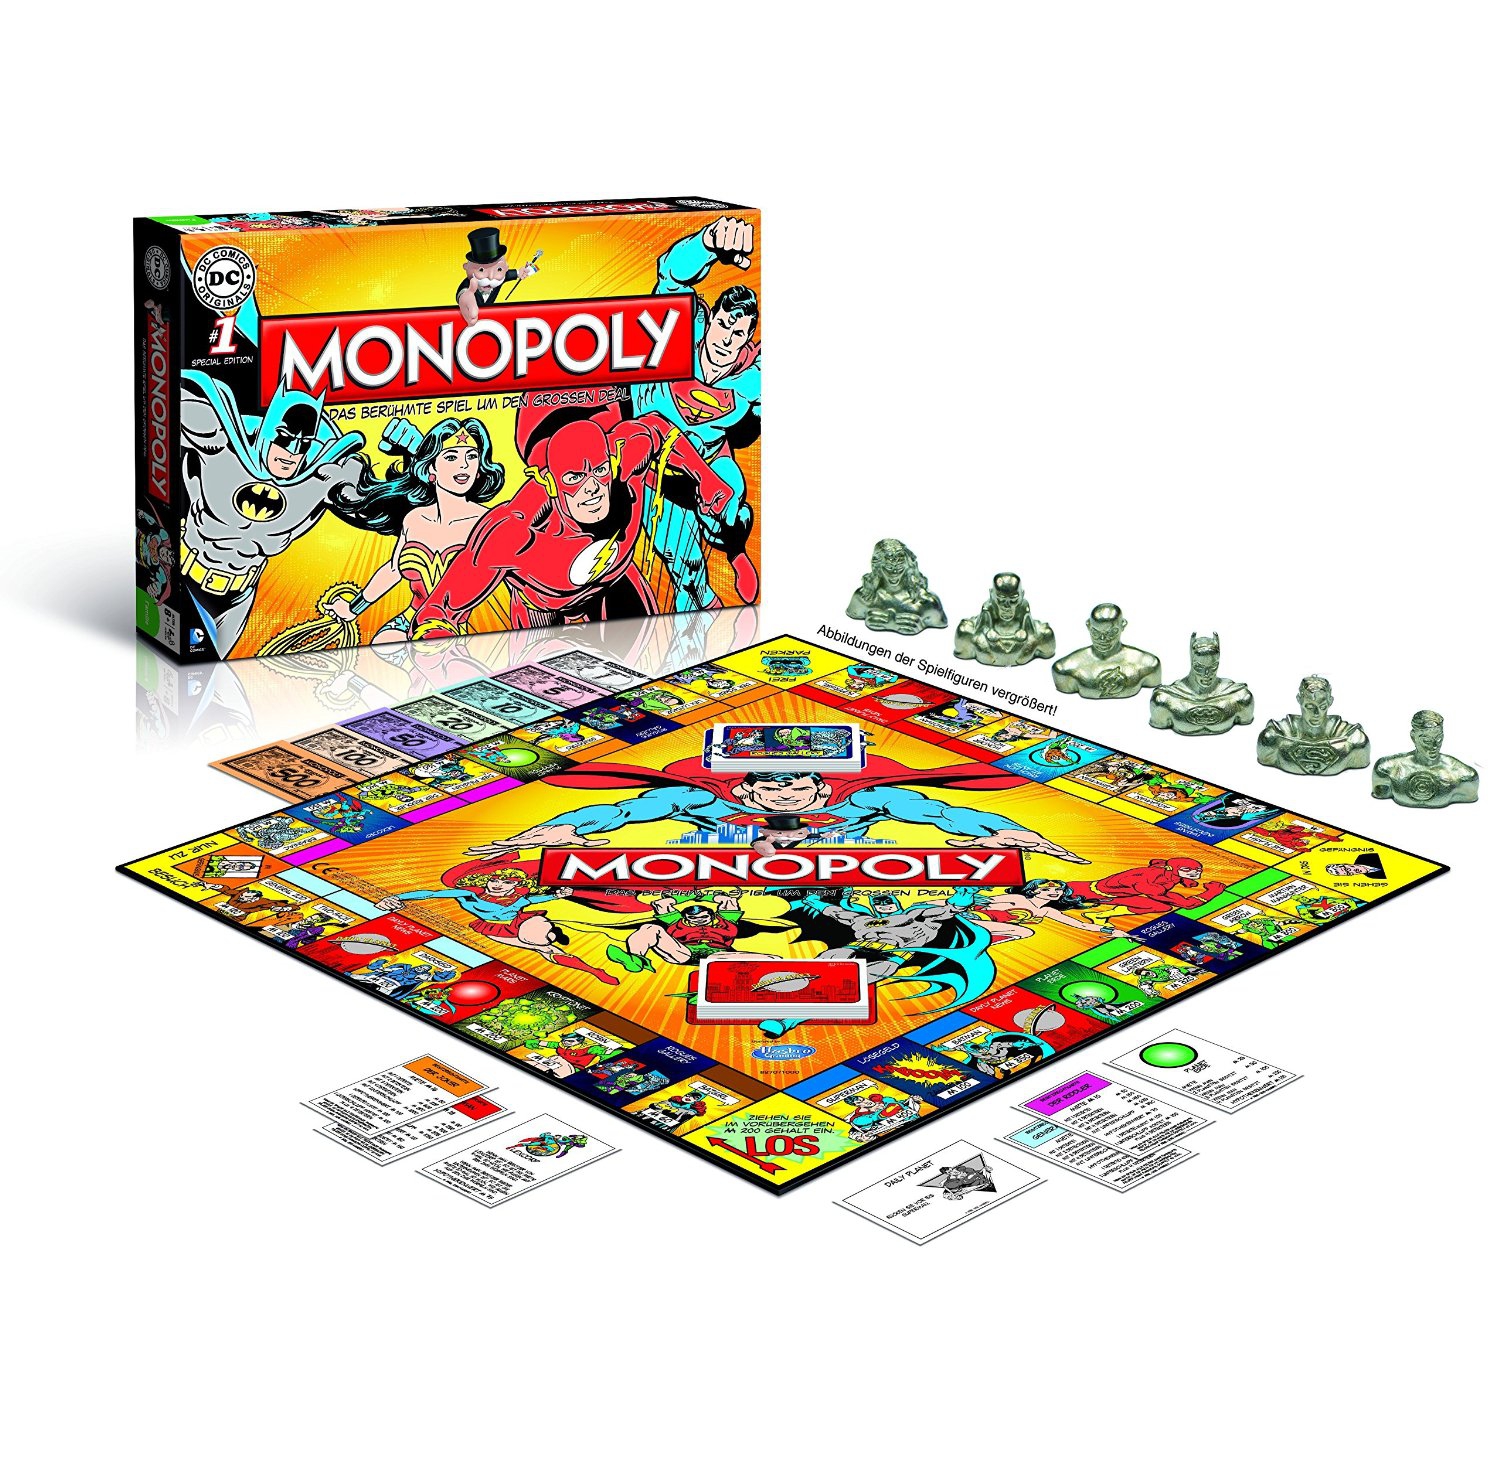 Dc Comics Original 'Special Edition' Monopoly Board Game